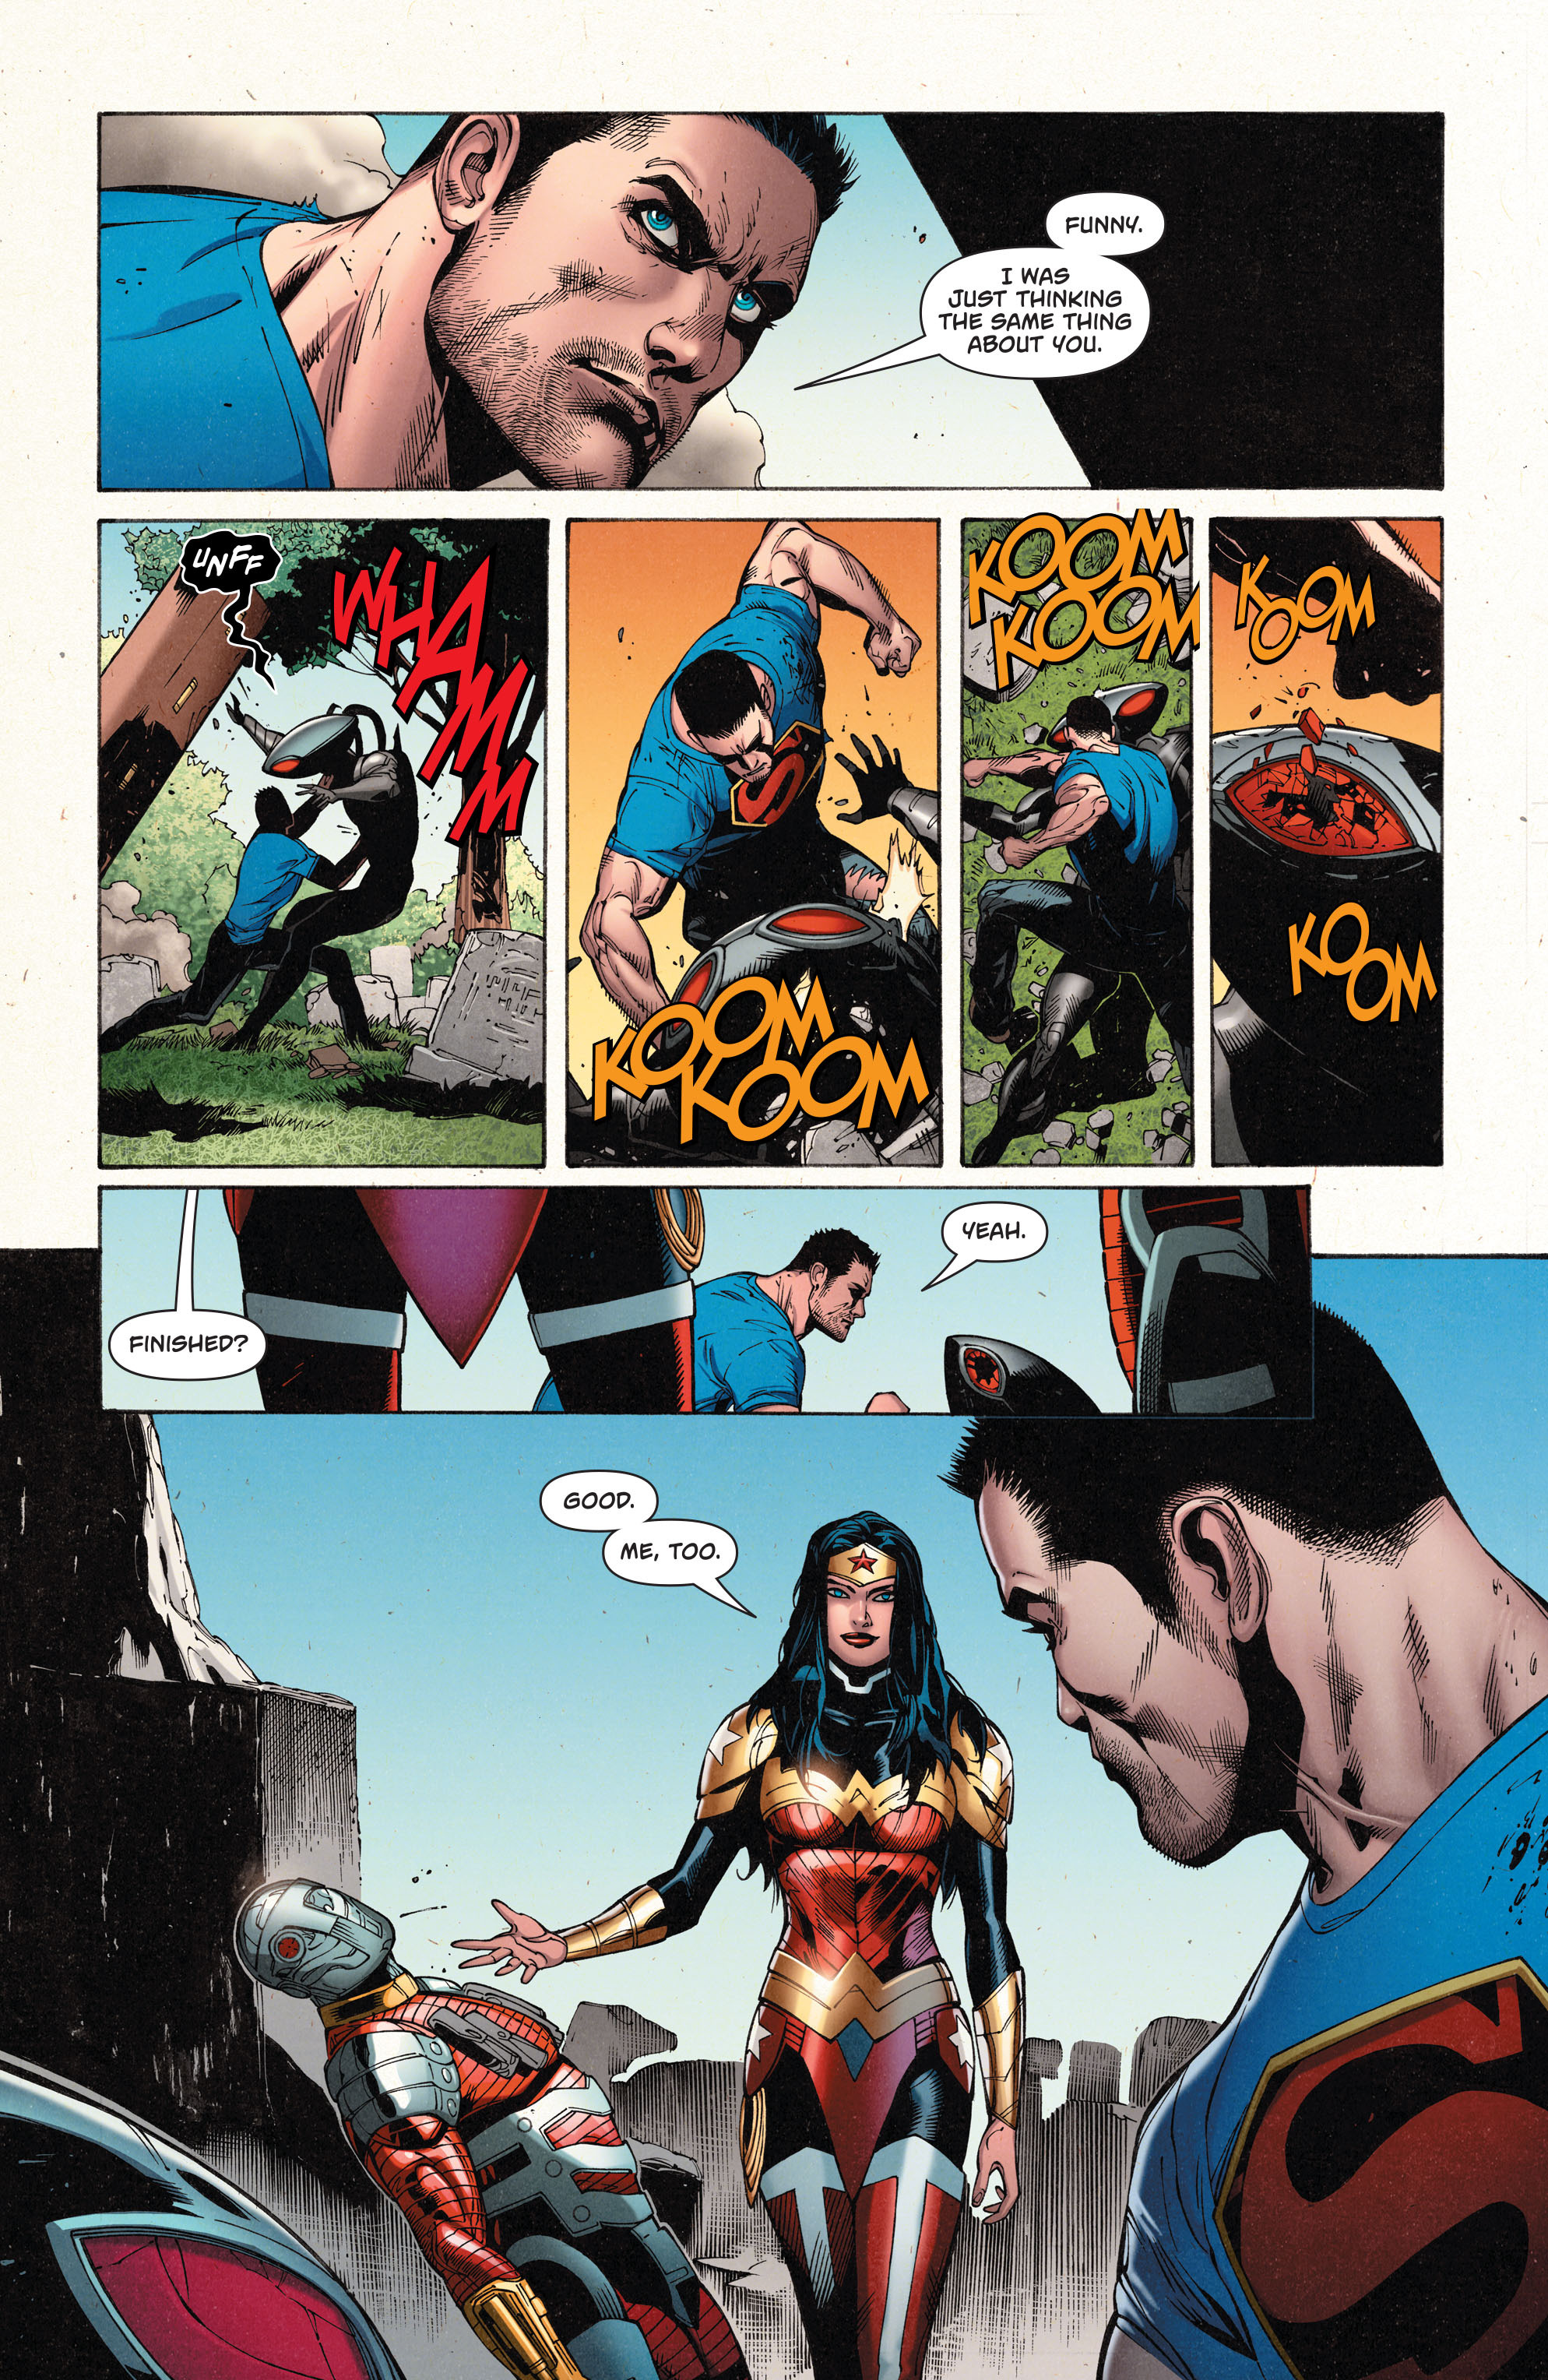 Superman Wonder Woman 2013 019 010